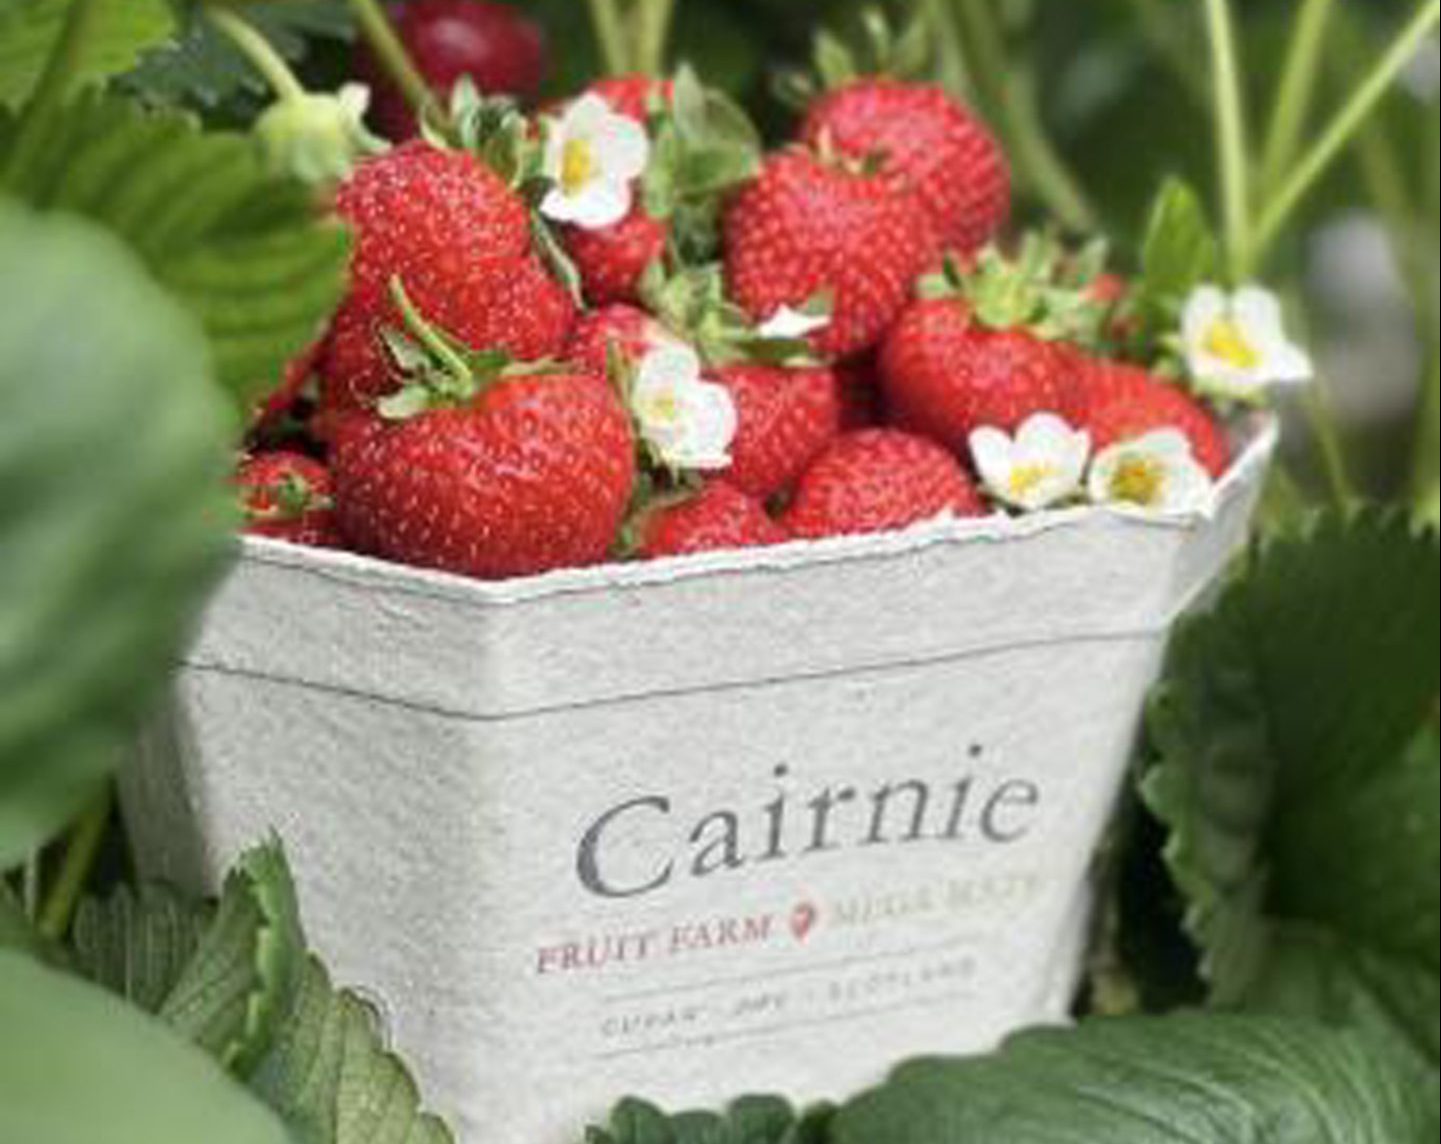 Box of Cairnie Fruit Farm strawberries.